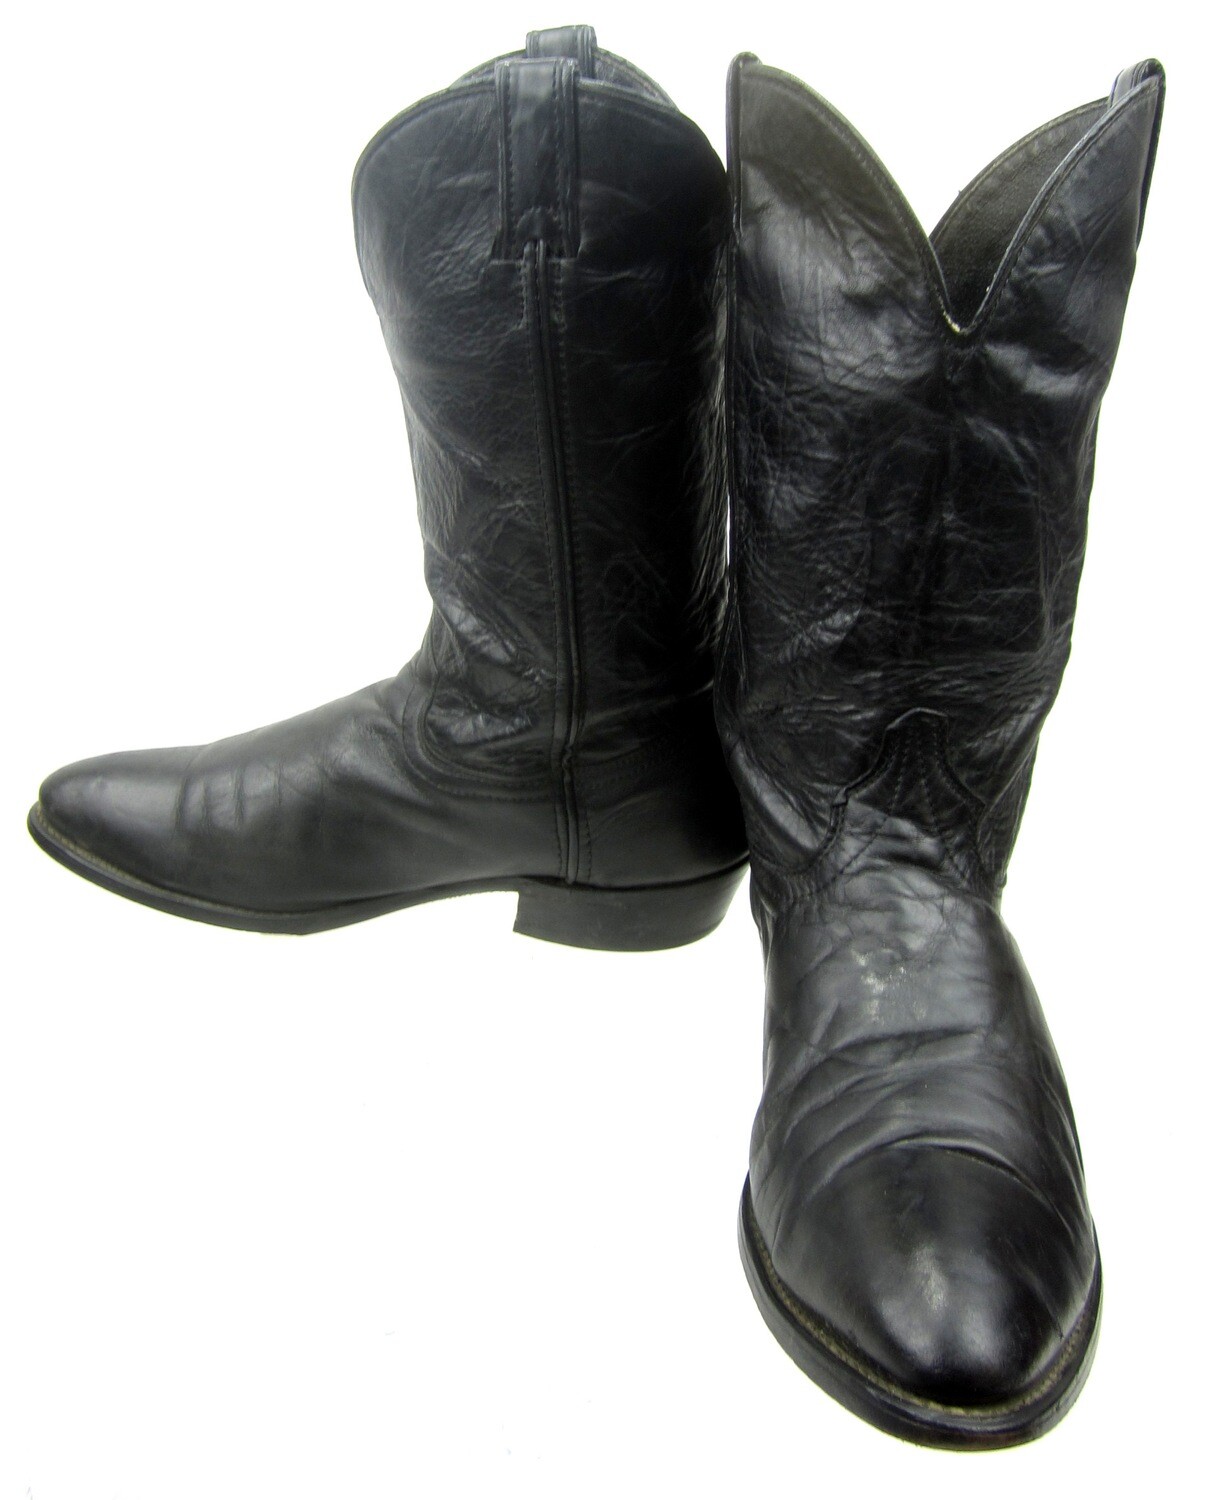 rockabilly cowboy boots